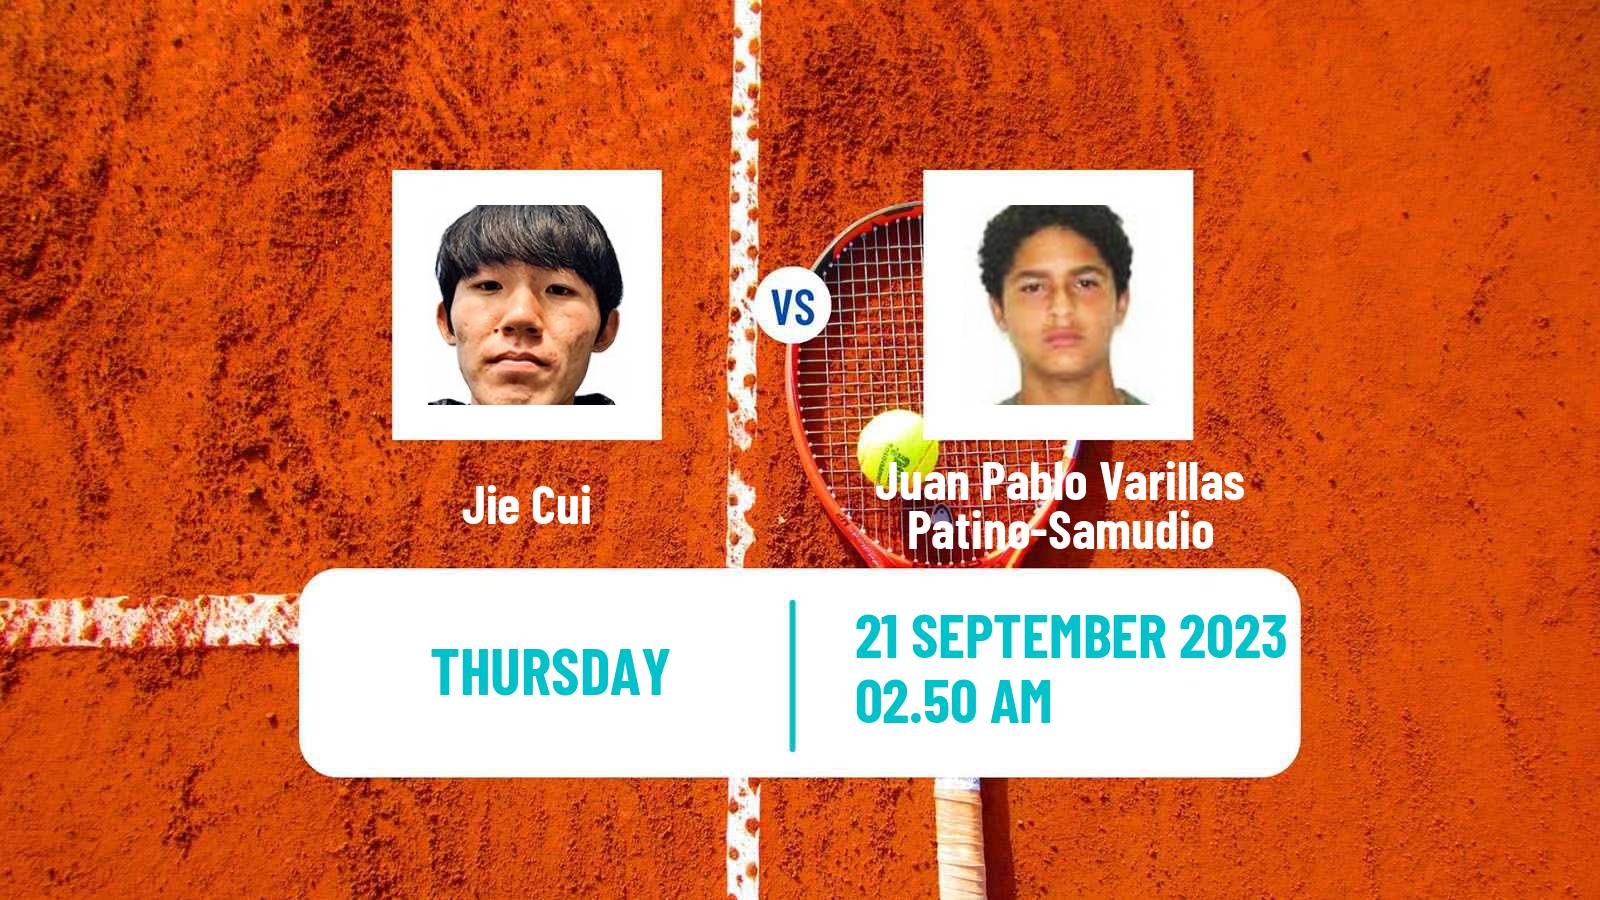 Tennis ATP Chengdu Jie Cui - Juan Pablo Varillas Patino-Samudio